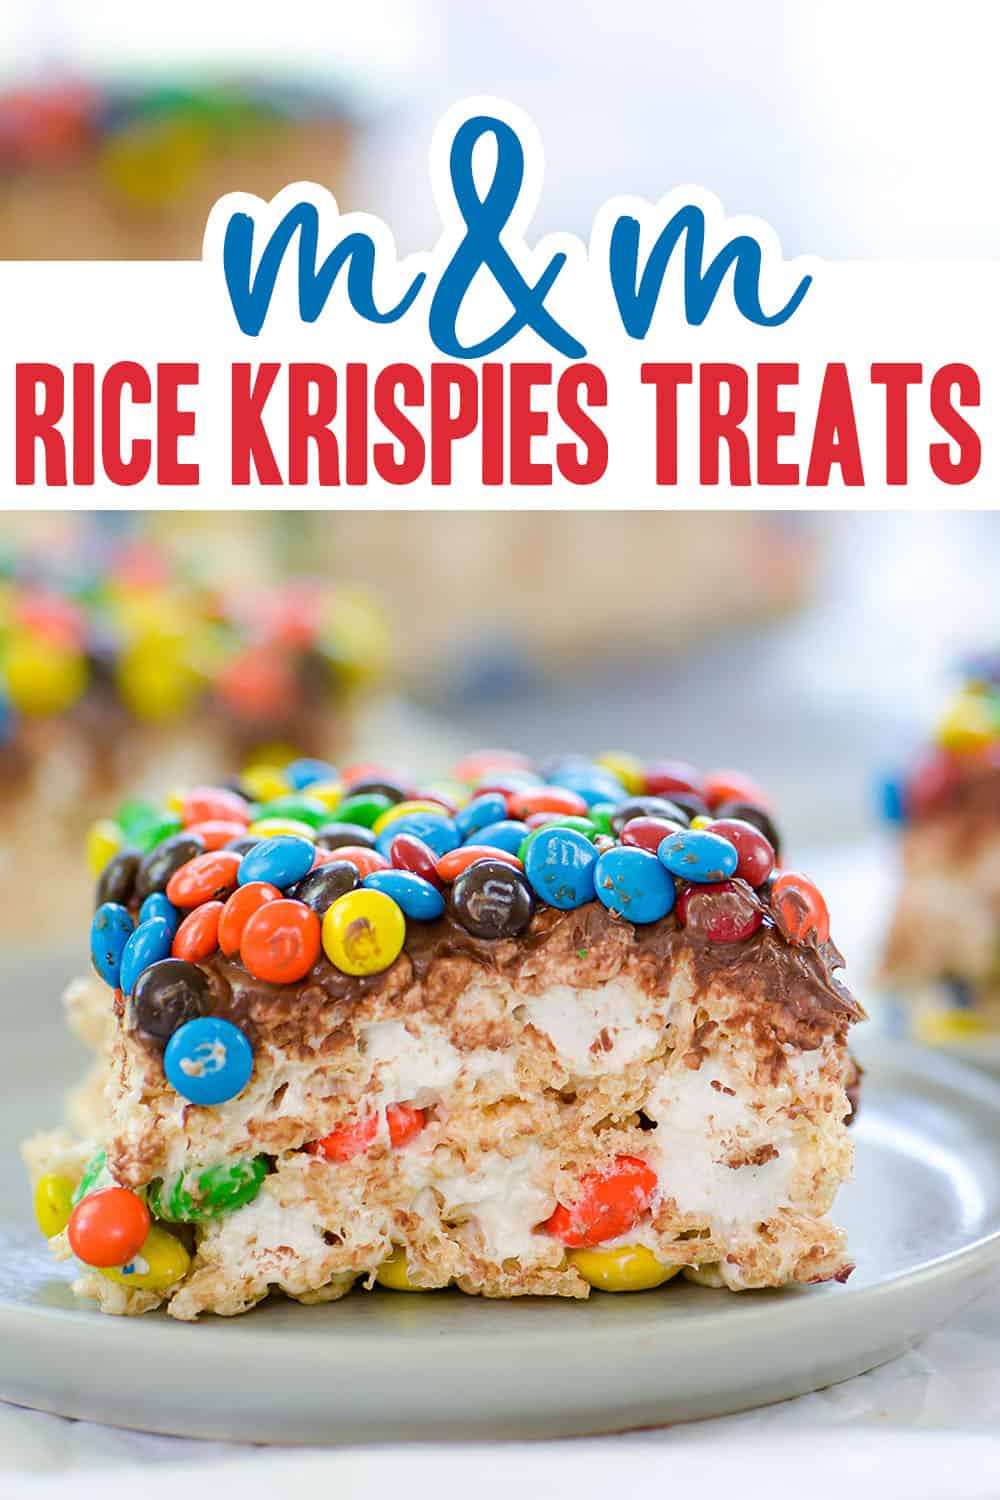 Rice Krispies Treats With M&M's Minis Milk Chocolate Candies